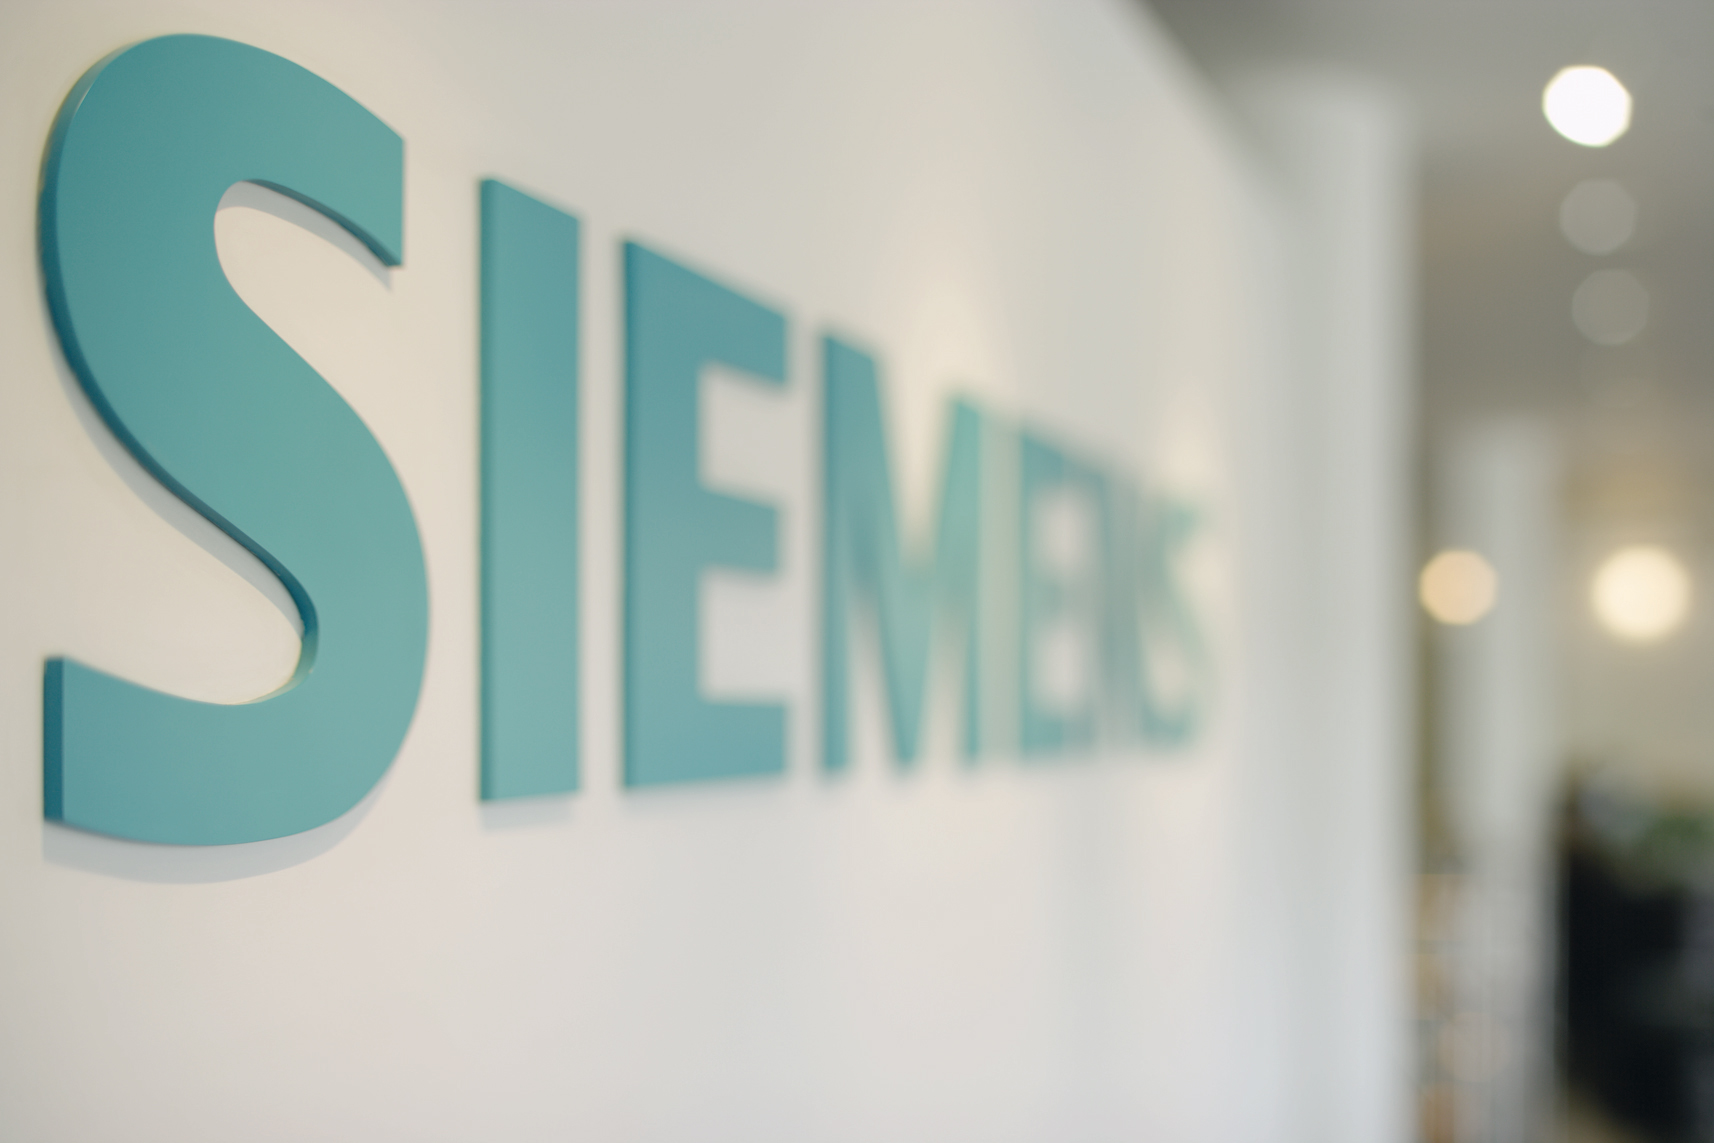 O Σήφης Βαλυράκης ζητά να συνεχιστεί η εξέταση του σκανδάλου Siemens